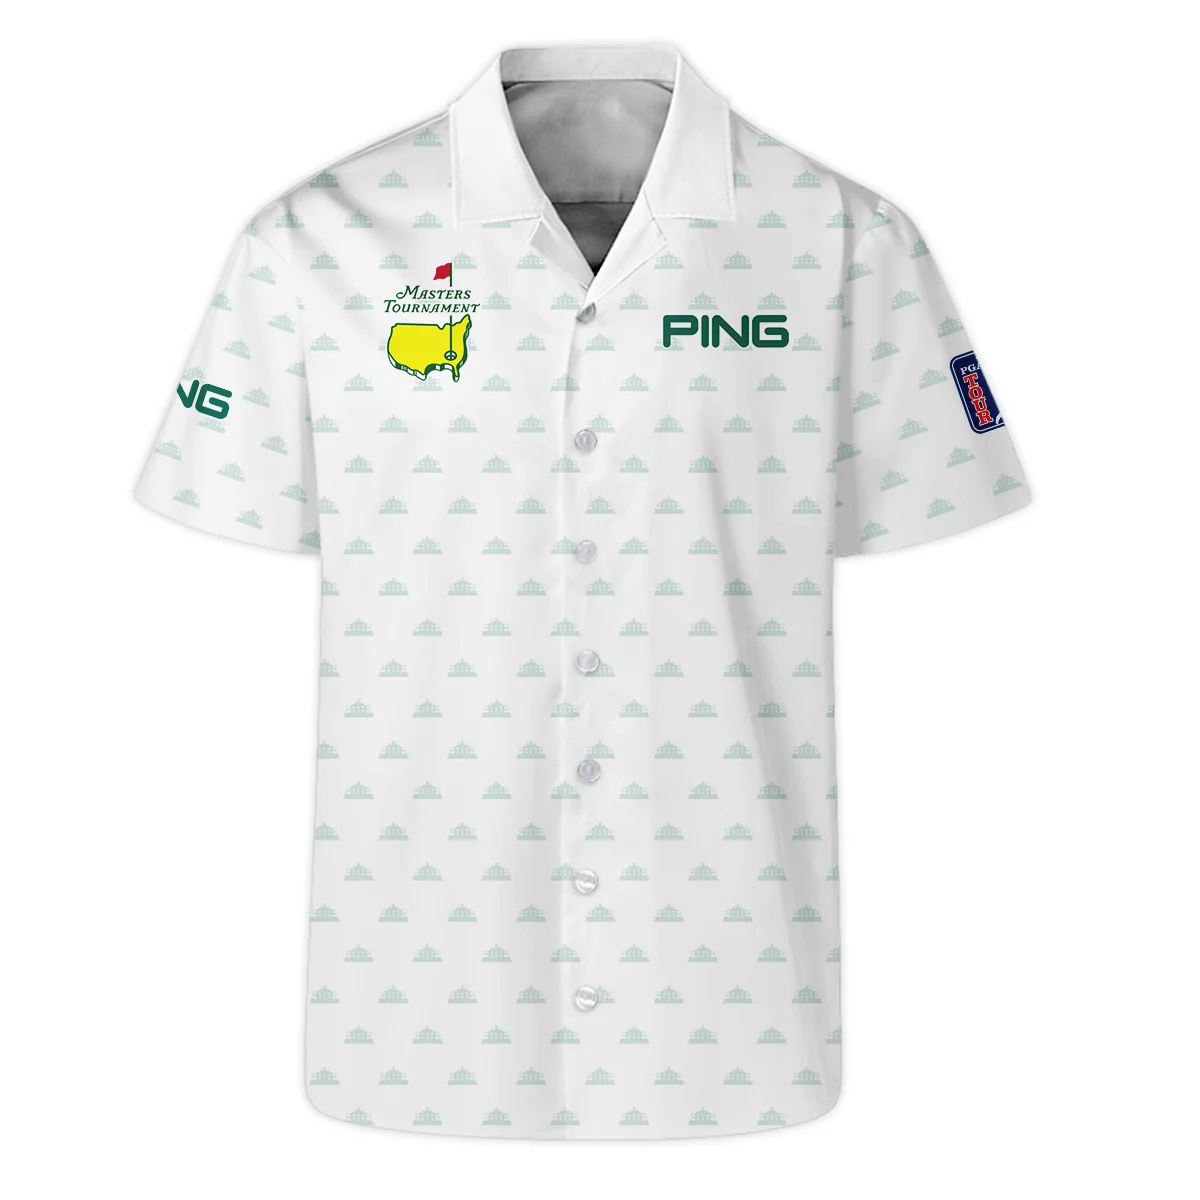 Golf Masters Tournament Ping Unisex Sweatshirt Cup Pattern White Green Golf Sports All Over Print Sweatshirt